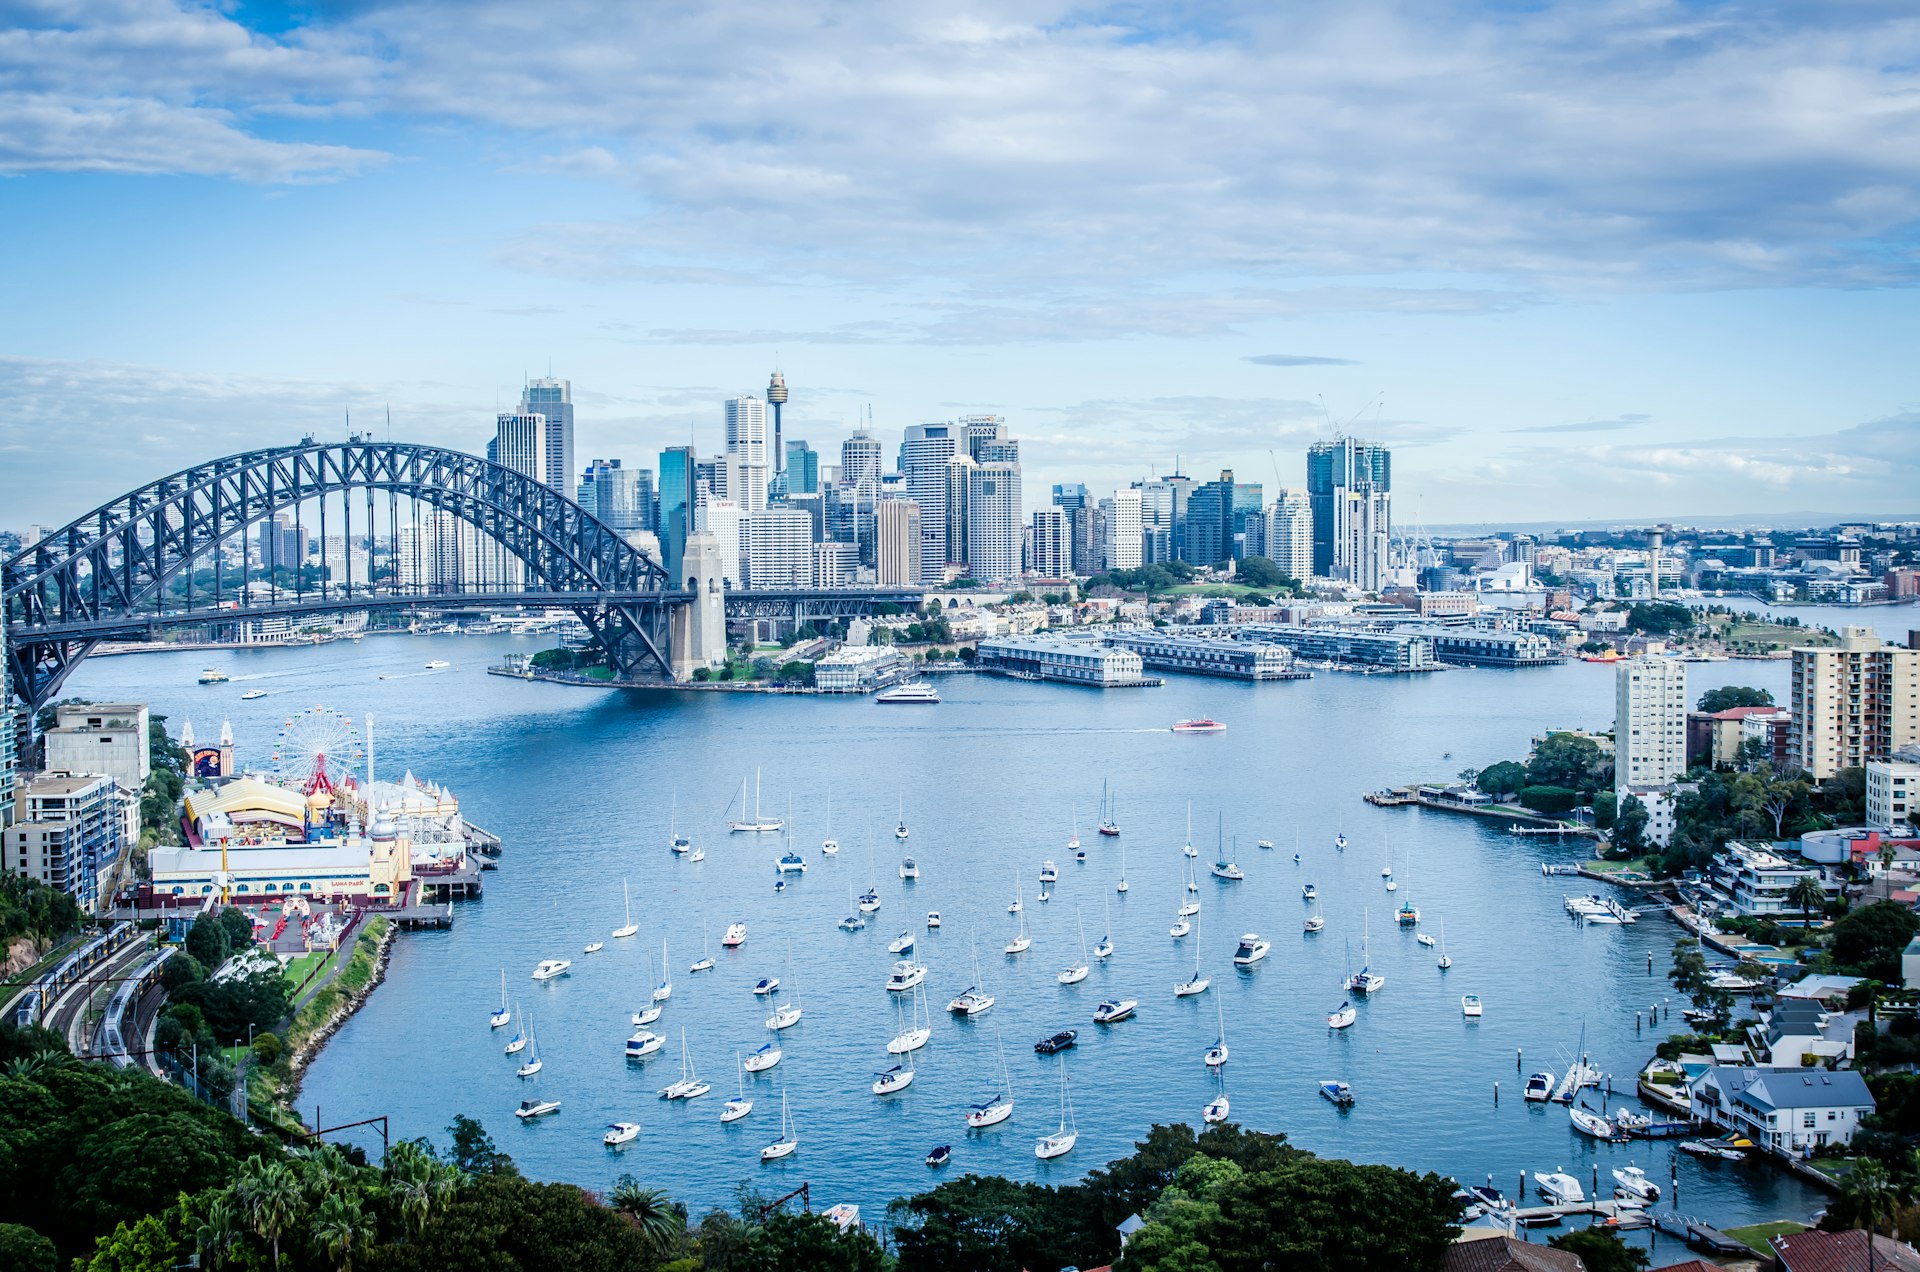 An aerial view of Sydney Harbour Bridge in Australia